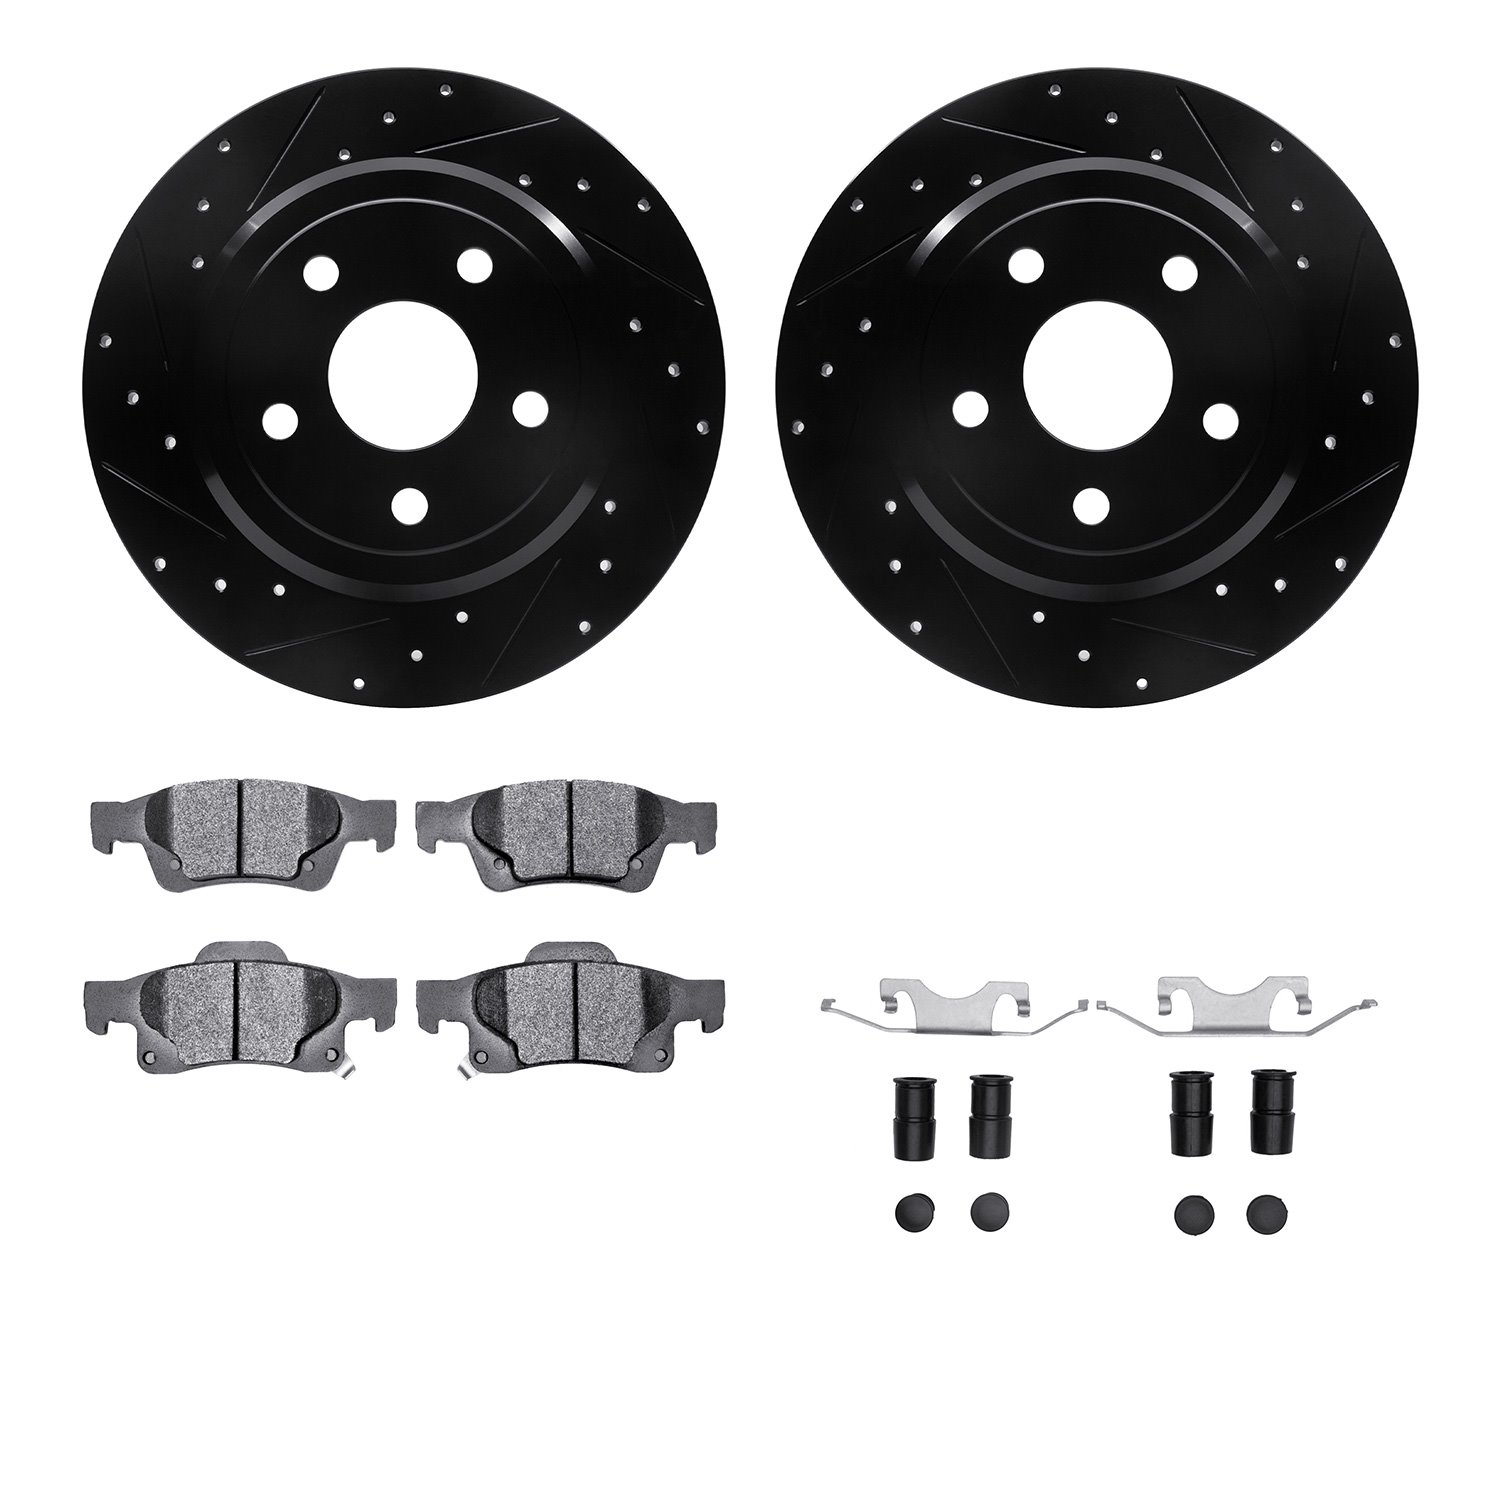 8412-42005 Drilled/Slotted Brake Rotors with Ultimate-Duty Brake Pads Kit & Hardware [Black], Fits Select Mopar, Position: Rear